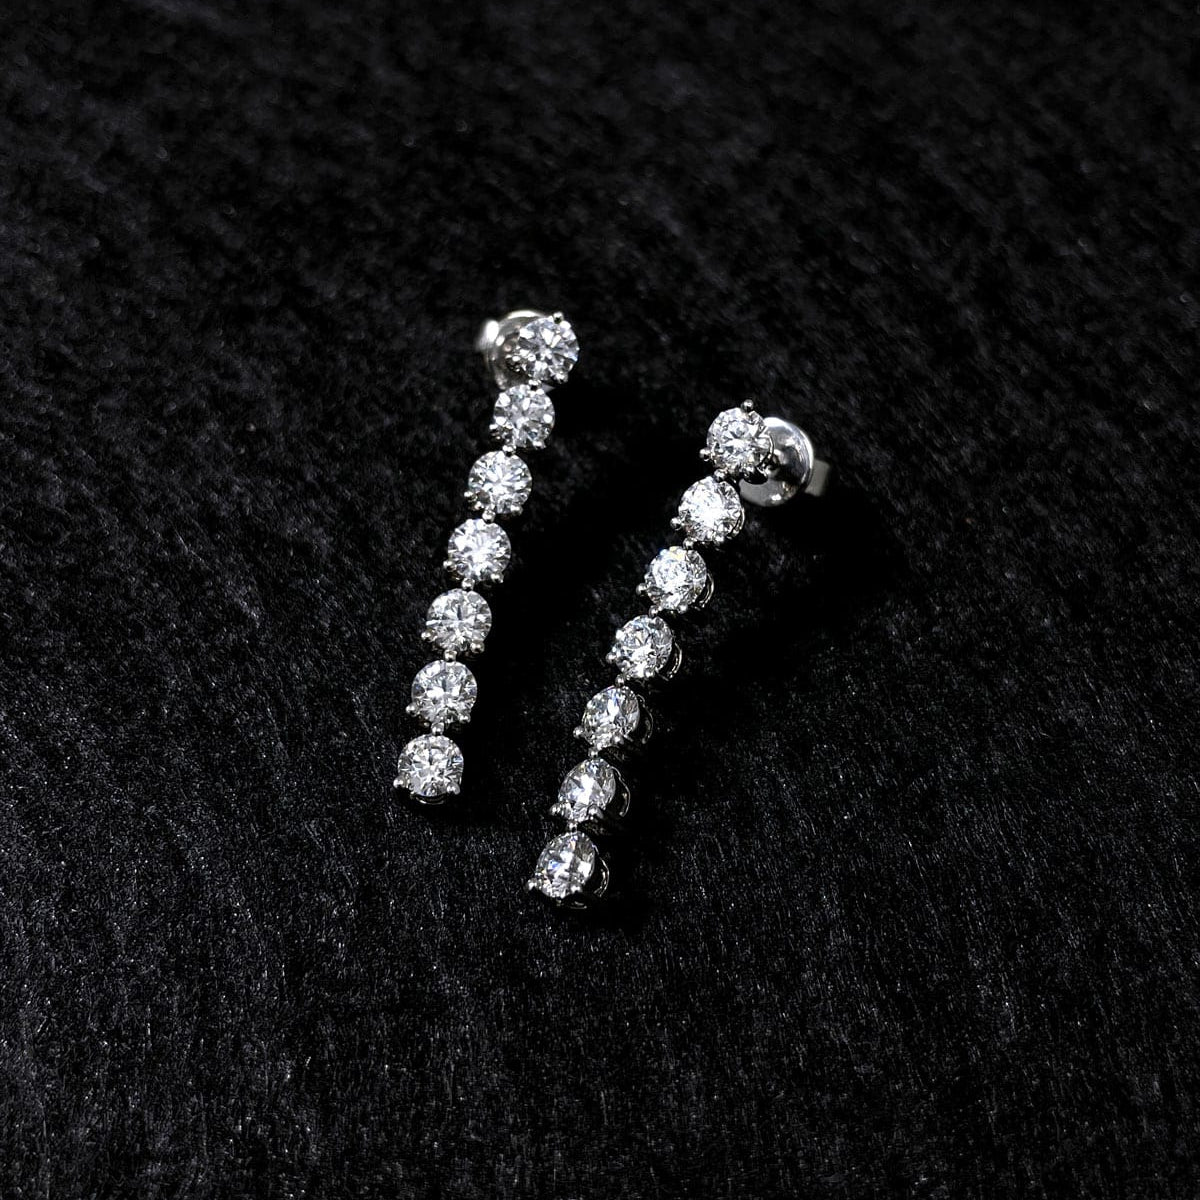 Cascade Stiletto Earrings available at LeGassick Diamonds and Jewellery Gold Coast, Australia.